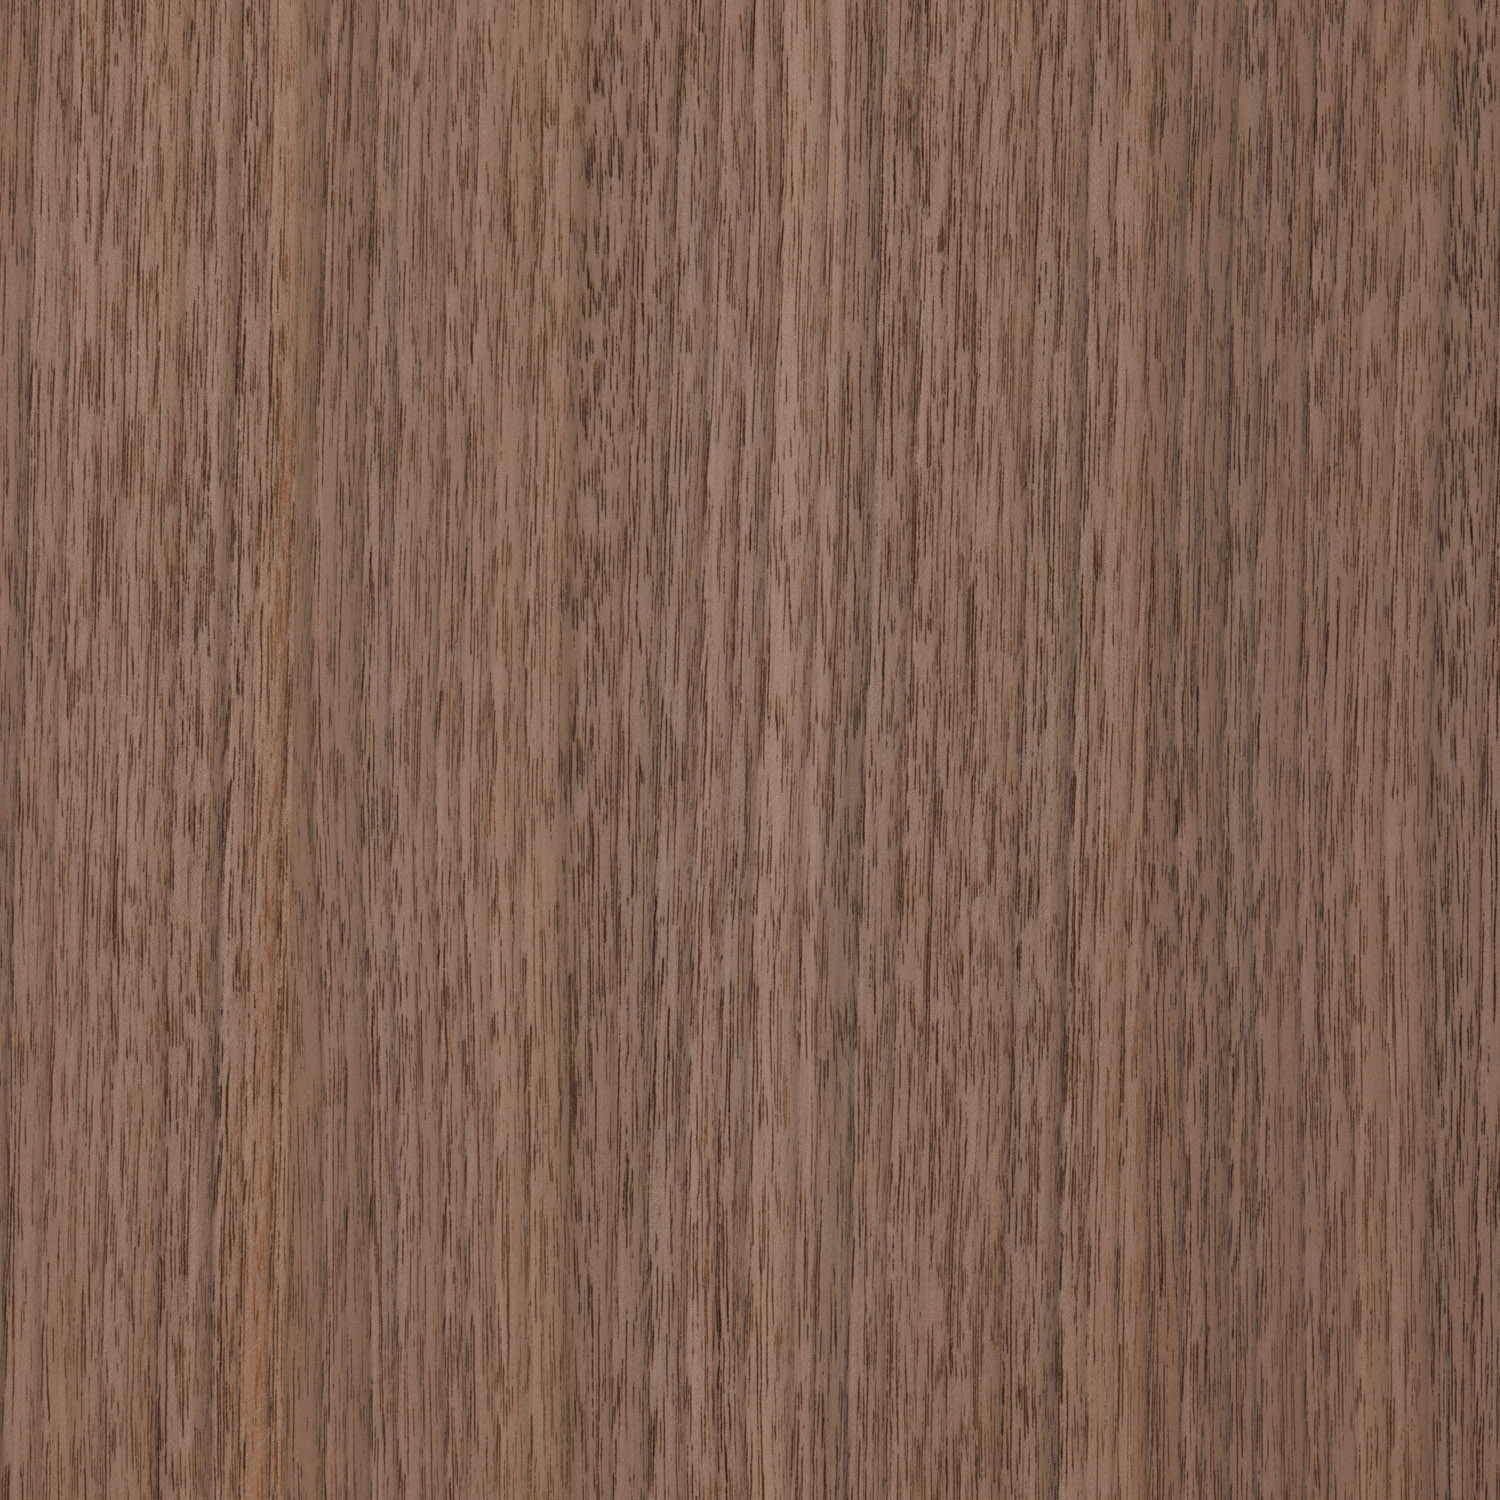 walnut natural wood veneer panel